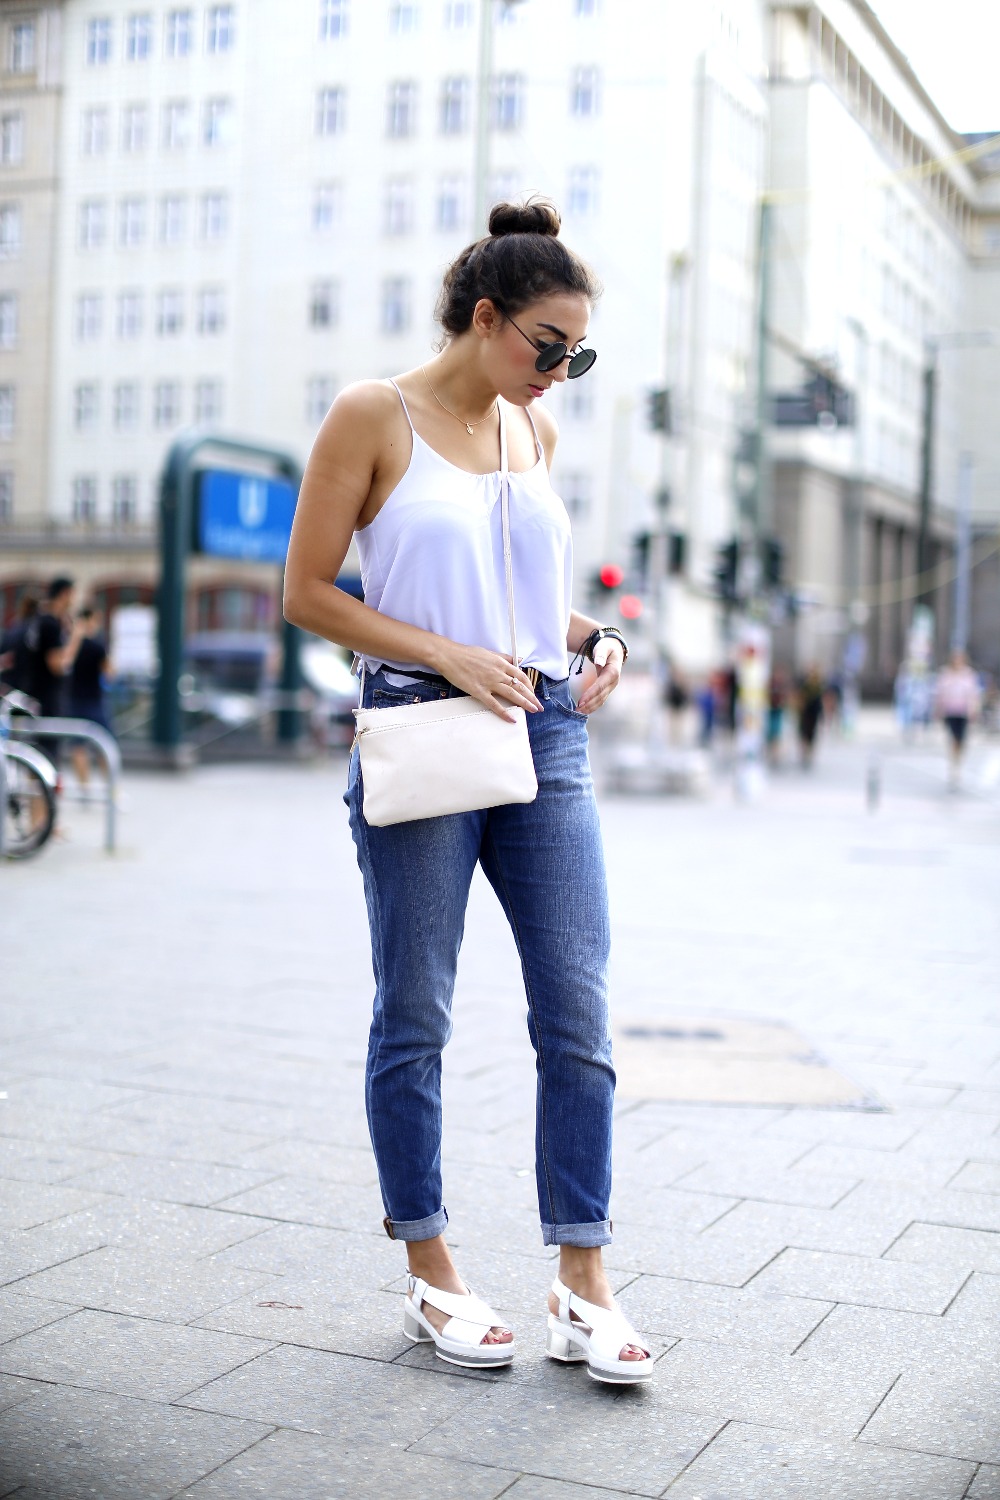 H&M Boyfriend Jeans Clarks Geta Sandals Round Sunglasses Strappy Top Fashionblogger Modeblog Berlin Samieze